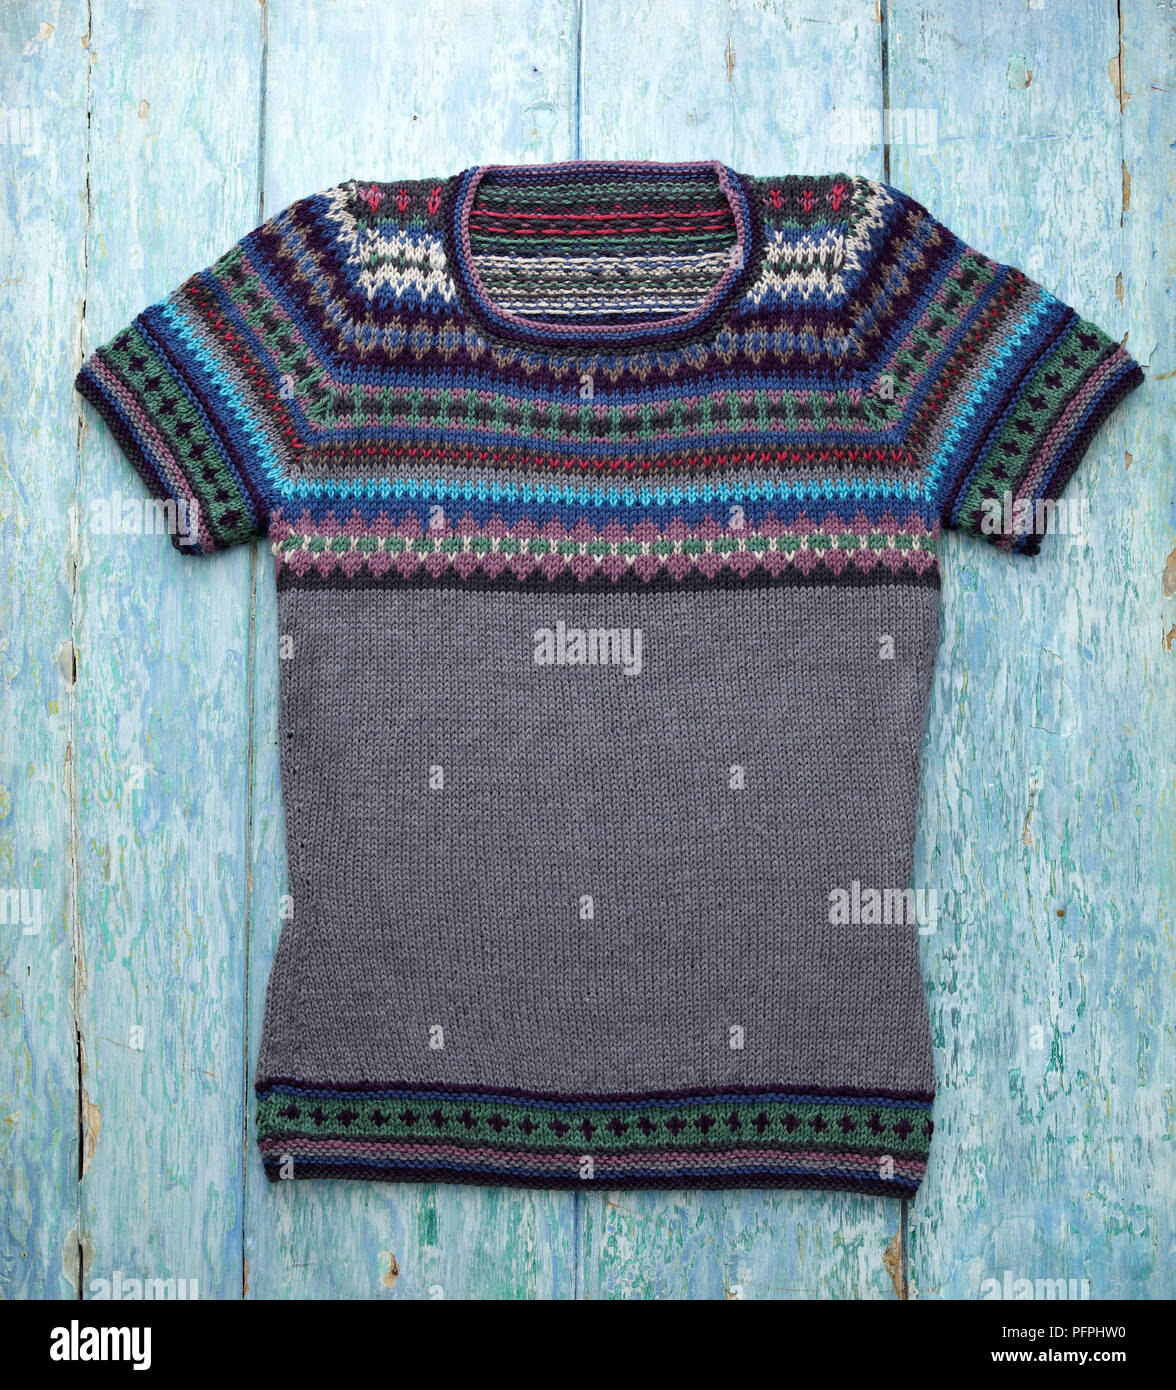 Fair-isle knitted yoke top on blue wood background, close-up Stock Photo